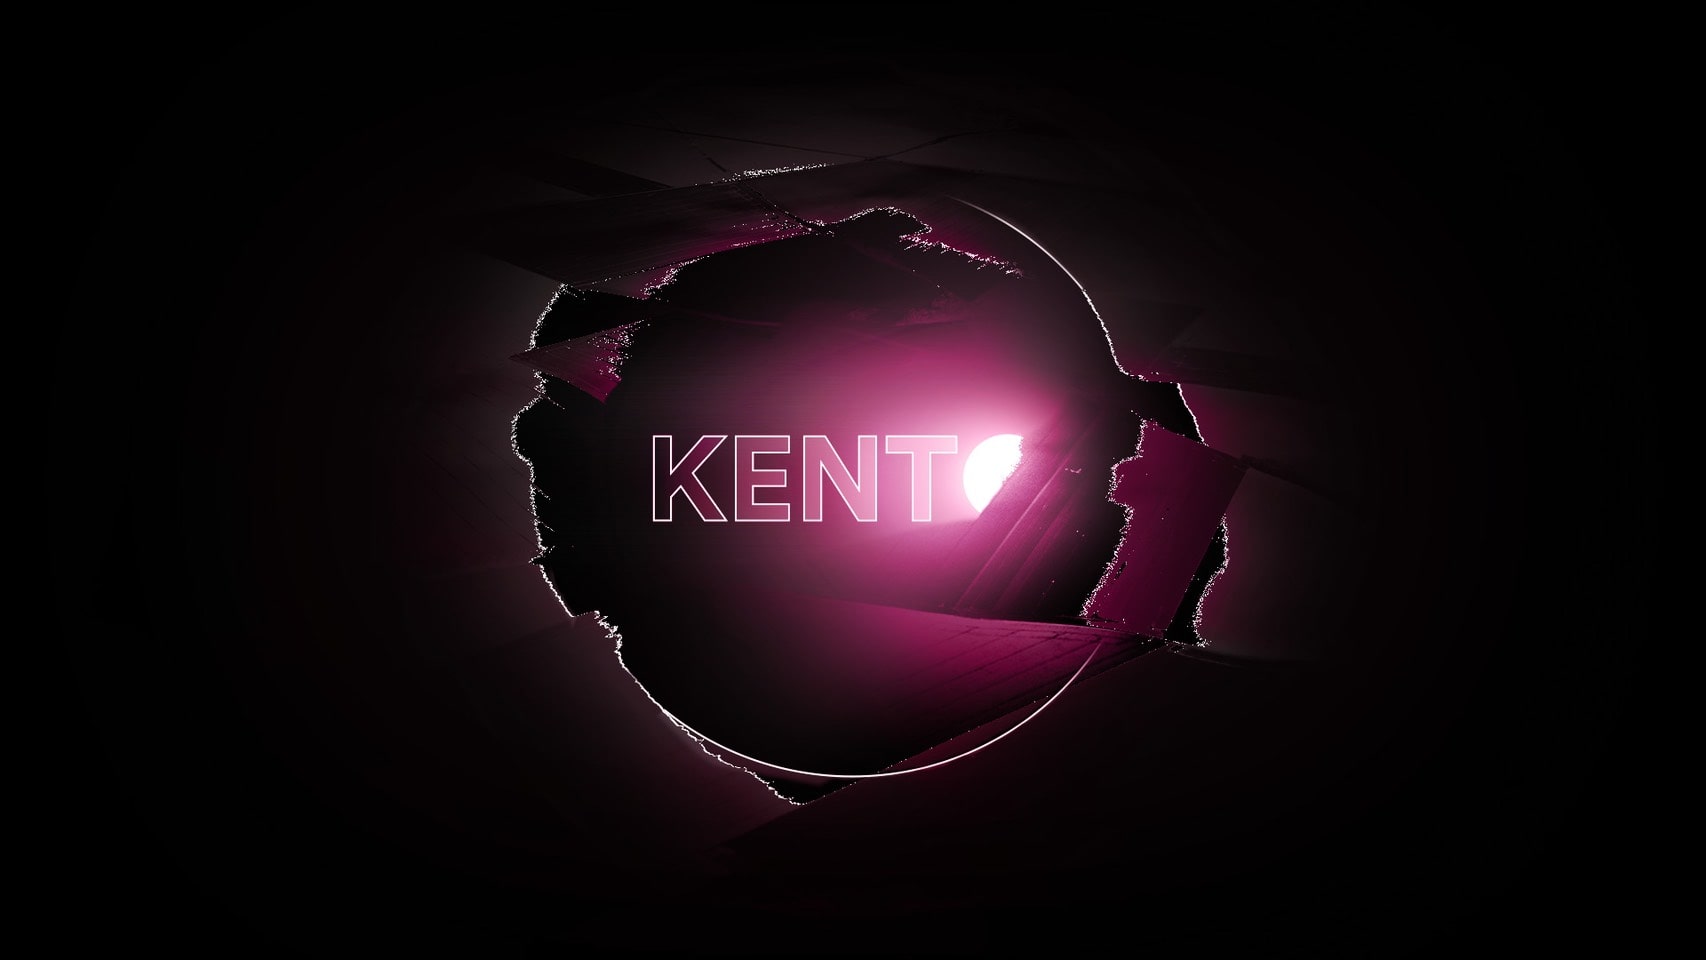 KENTO AR project - WIND